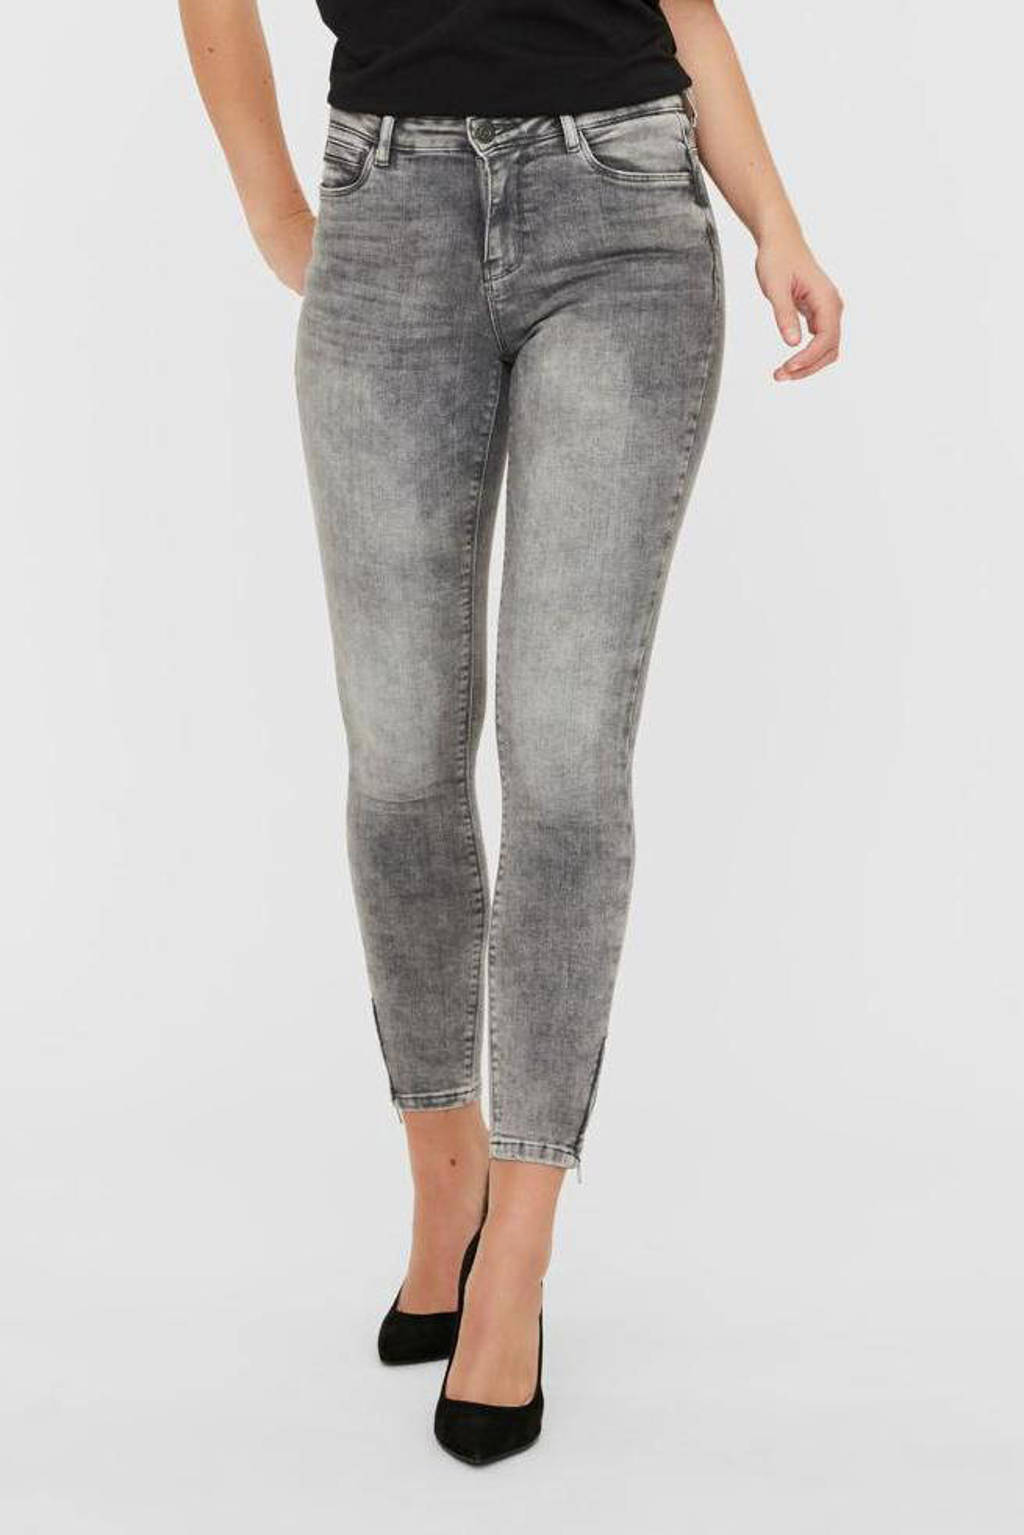 Grijze dames NOISY MAY jeans van stretchdenim met skinny fit, regular waist en rits- en knoopsluiting